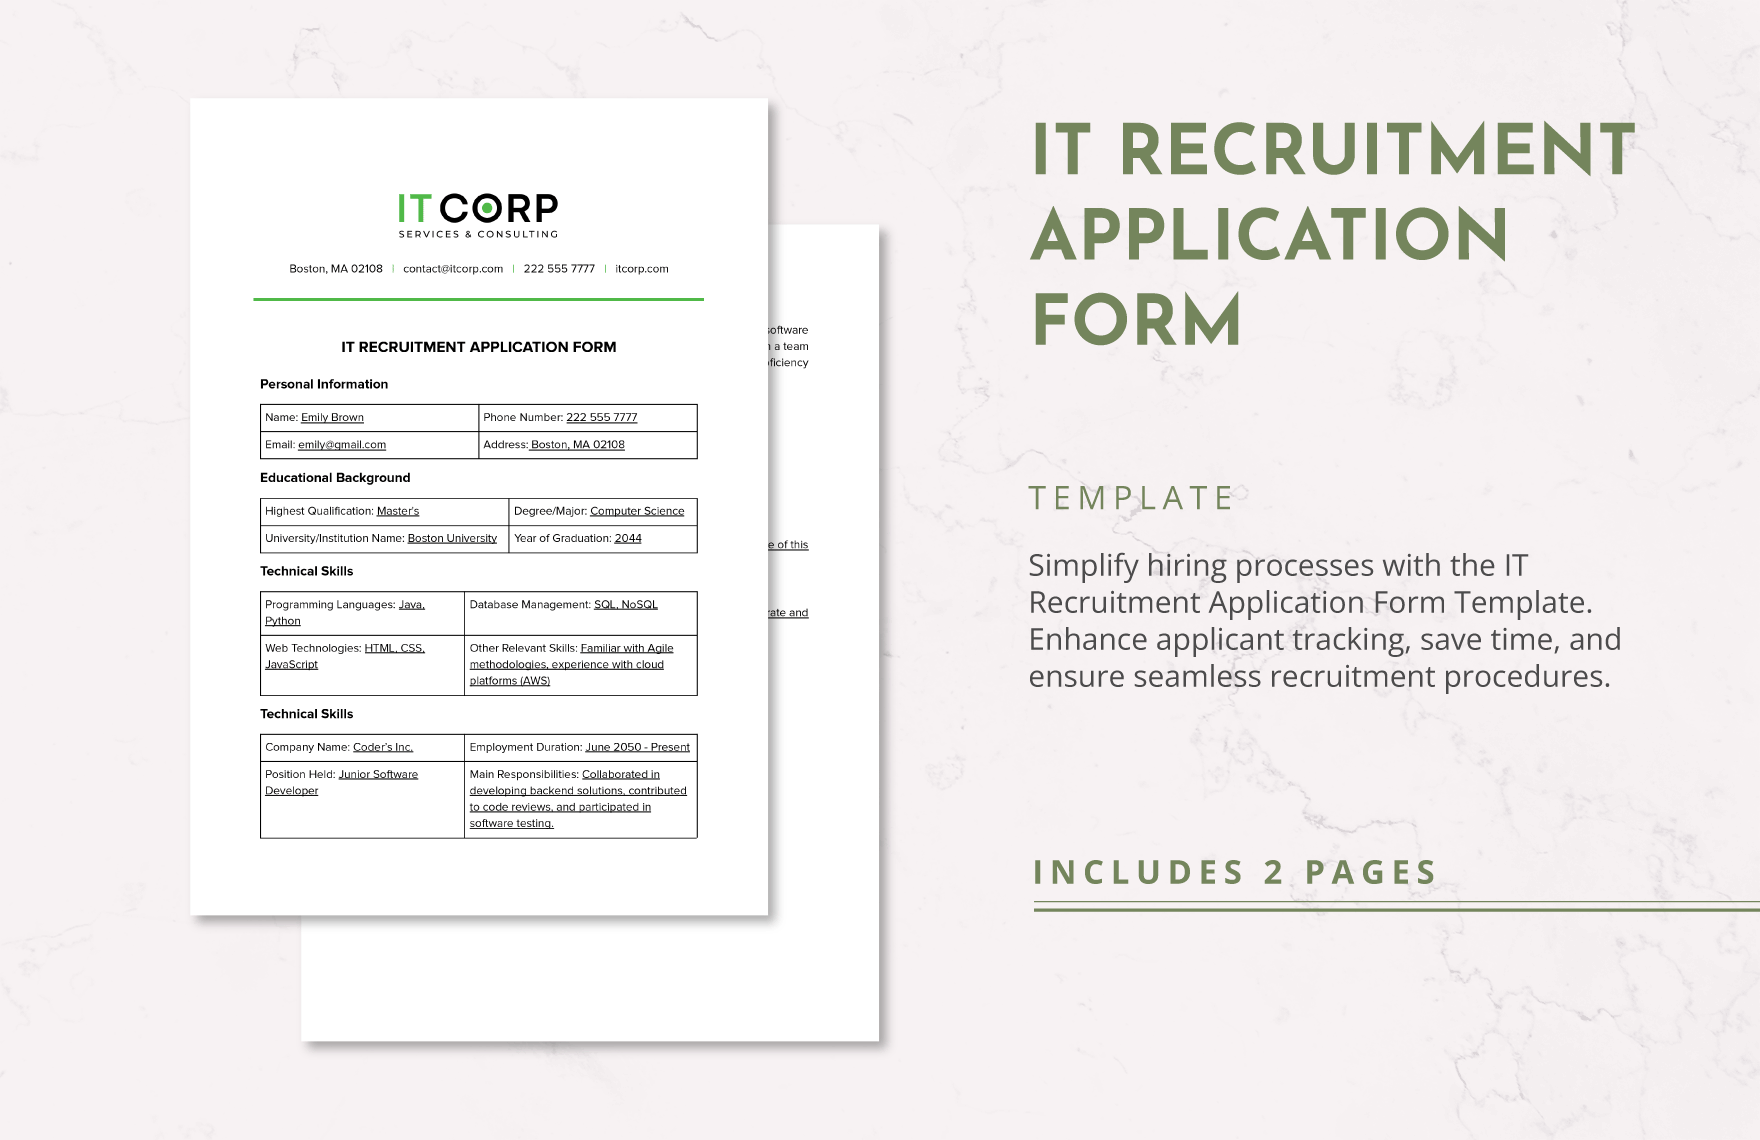 IT Recruitment Application Form Template